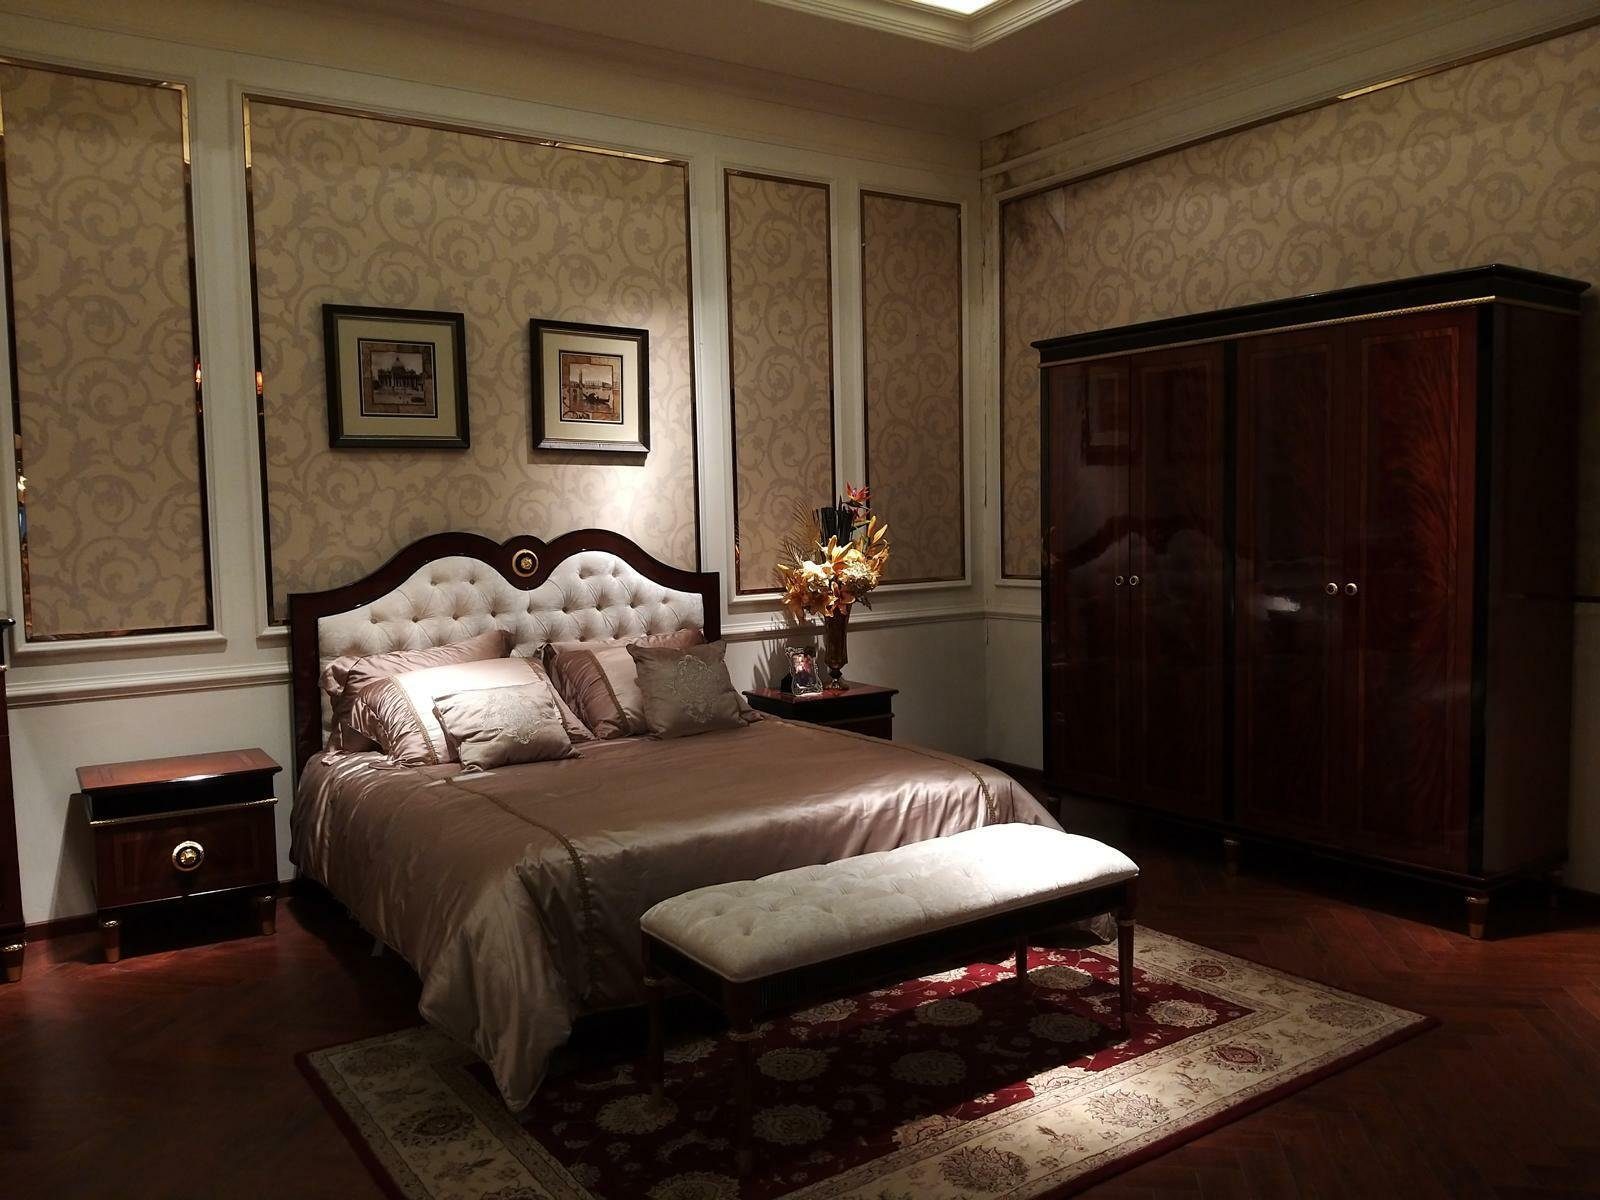 JVmoebel Bett, Doppelbett Bett Ehebett Design Luxus Luxur Betten Barock Rokoko